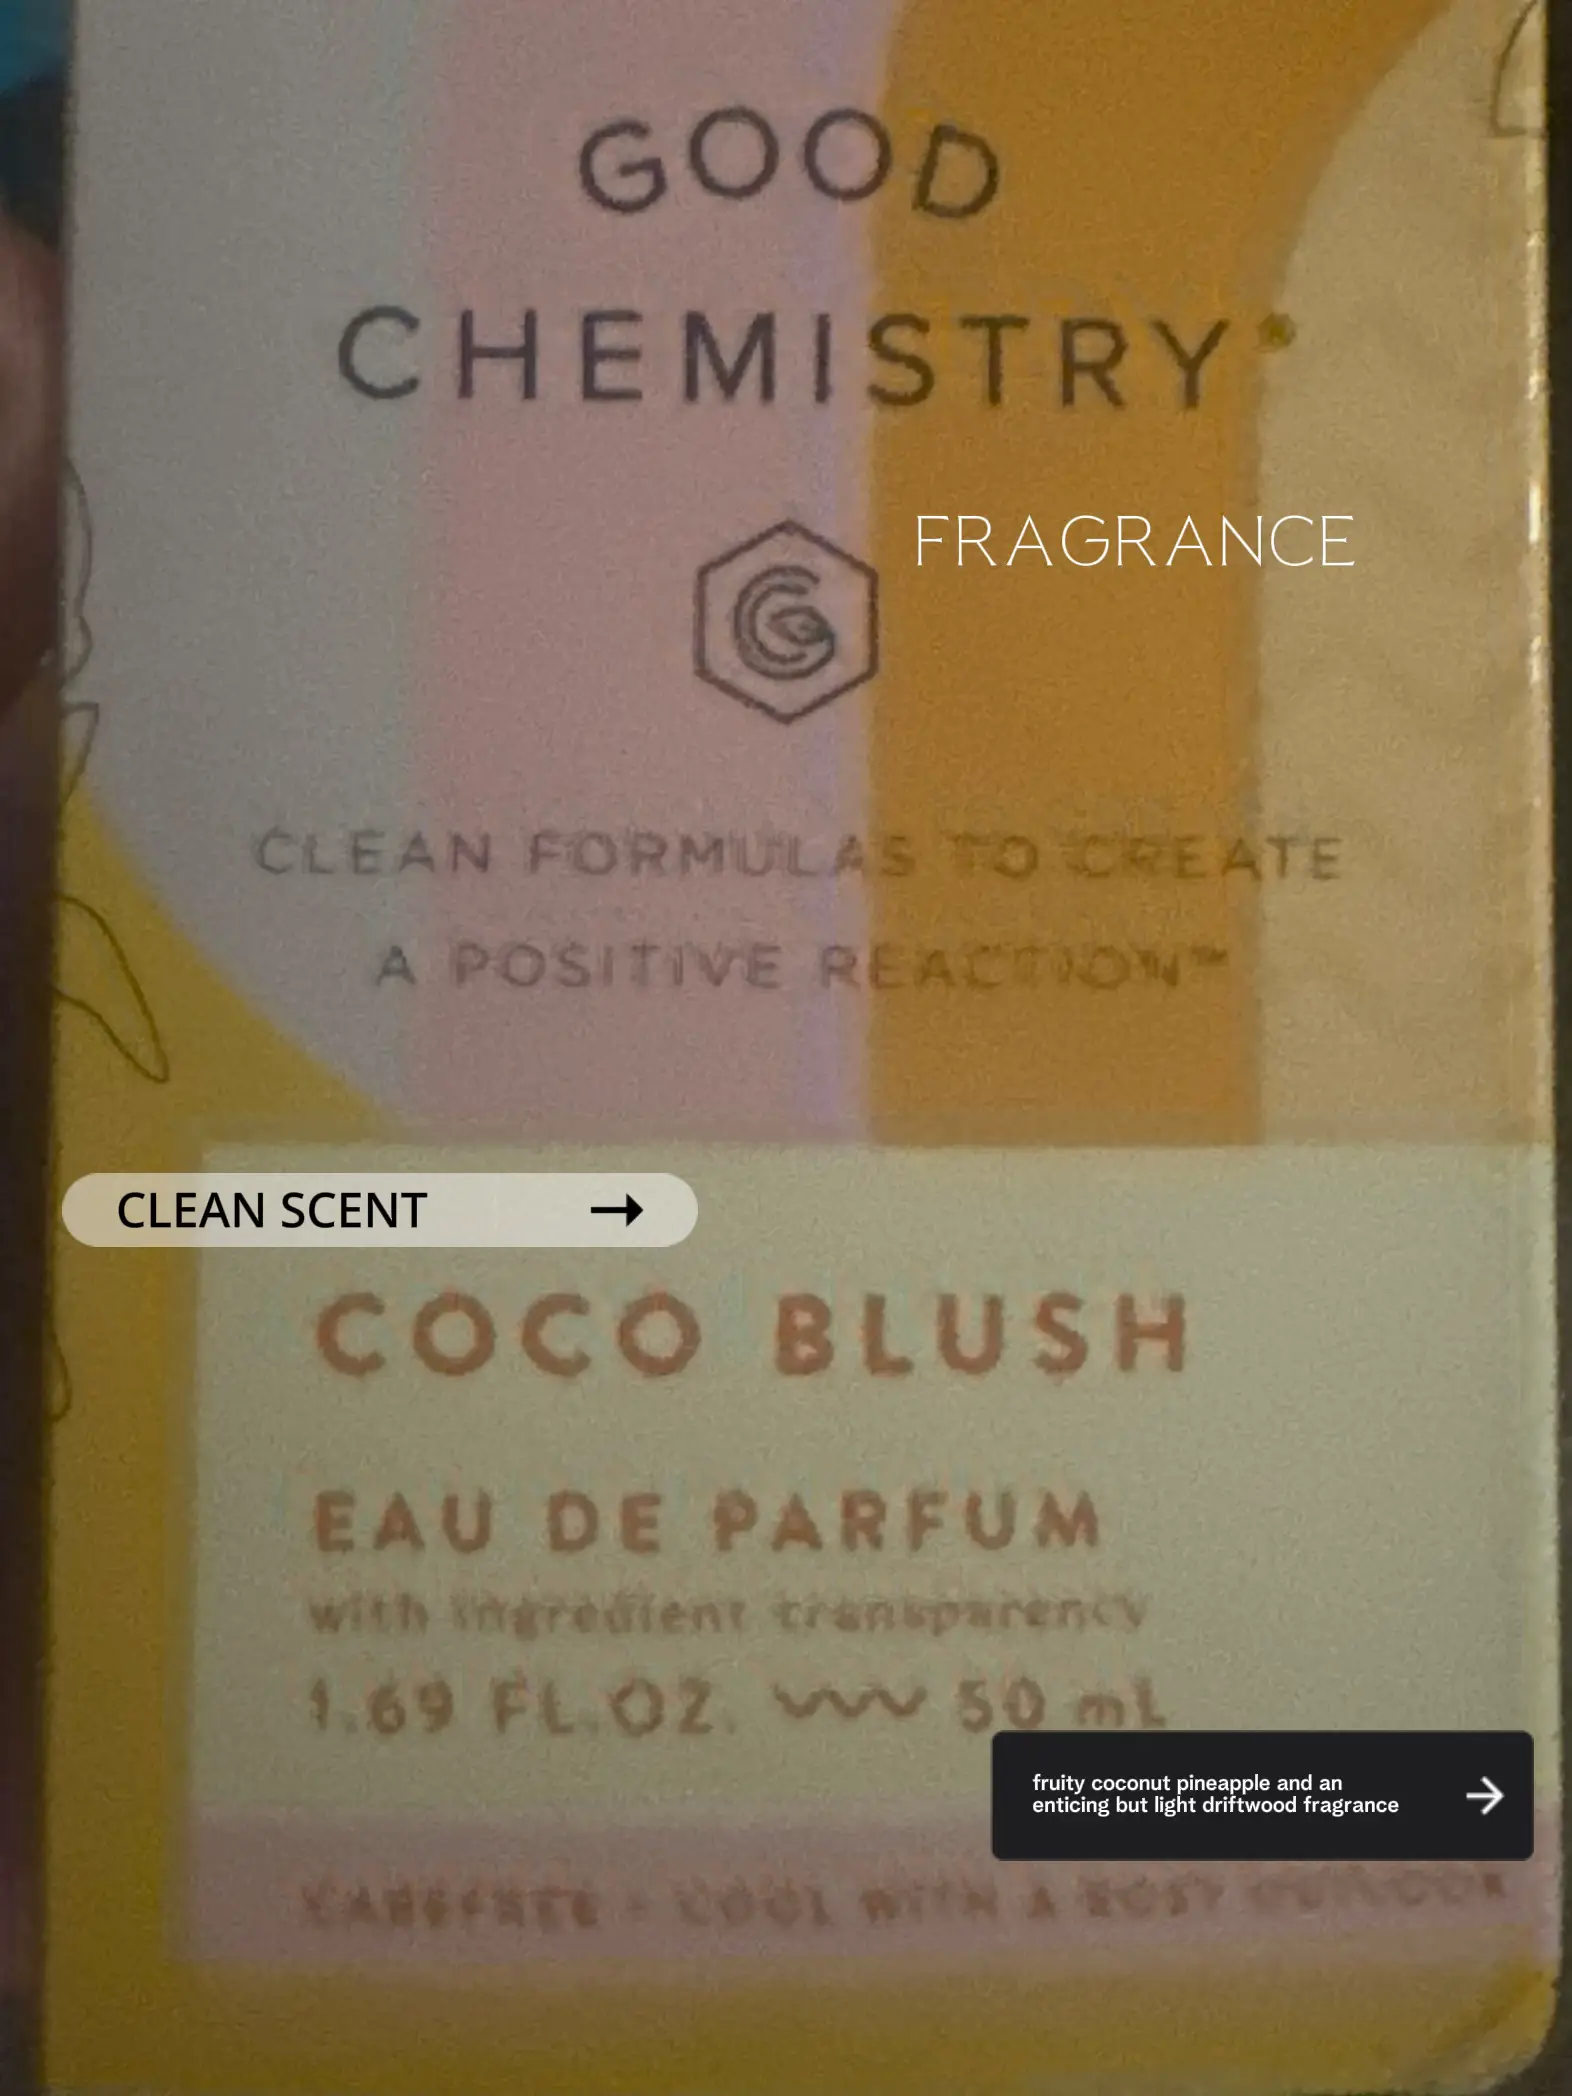 Good Chemistry Eau De Parfum Perfume Coco Blush 1.69 fl oz